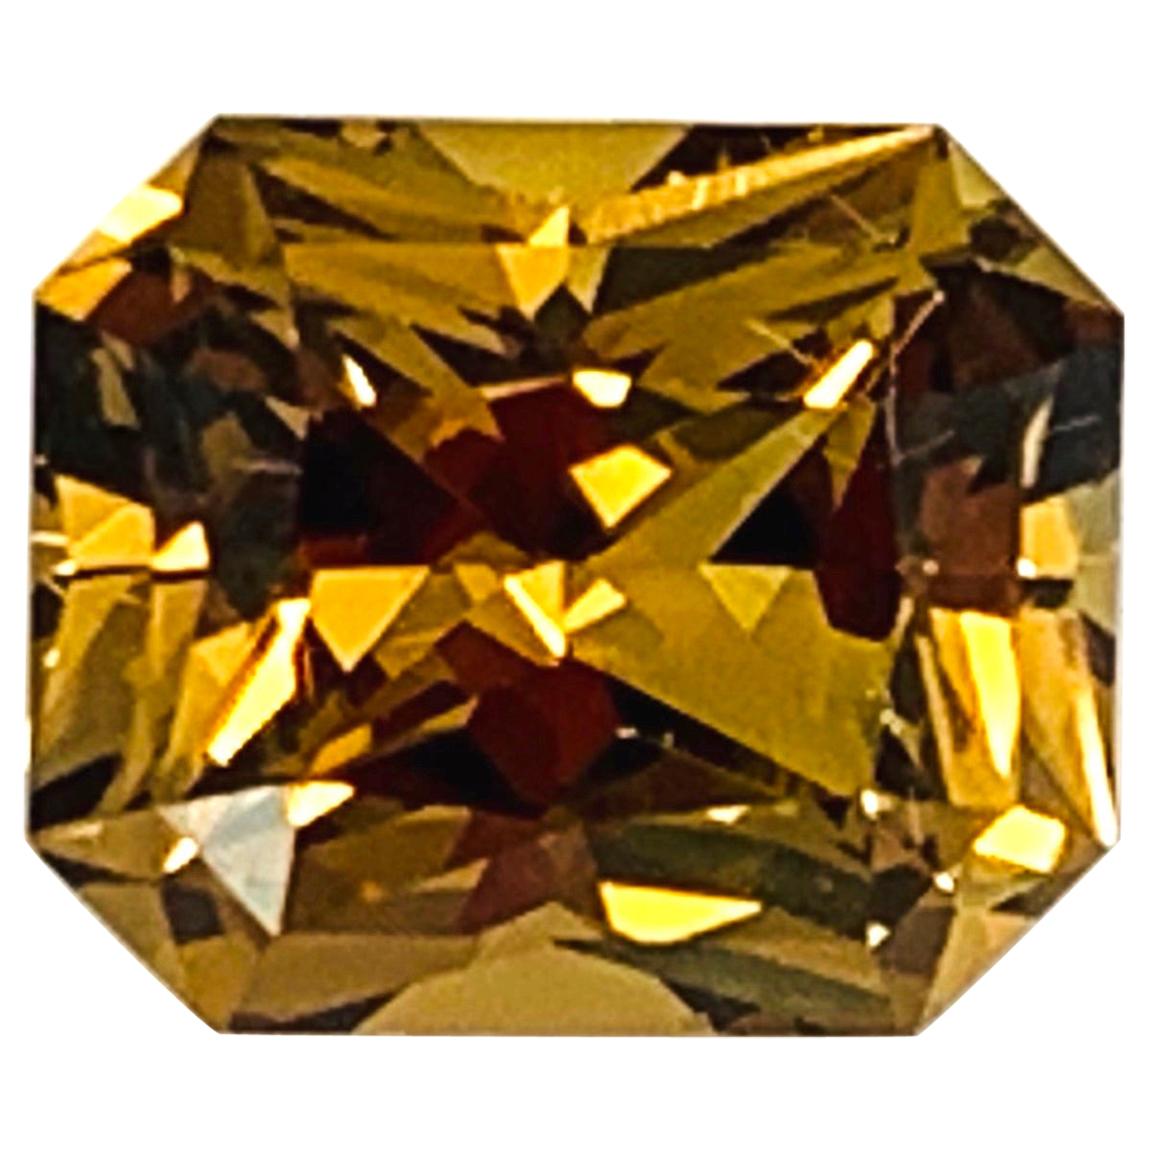 6.40 Carat Octagon Cut Golden Zircon, Unset Loose Gemstone For Sale